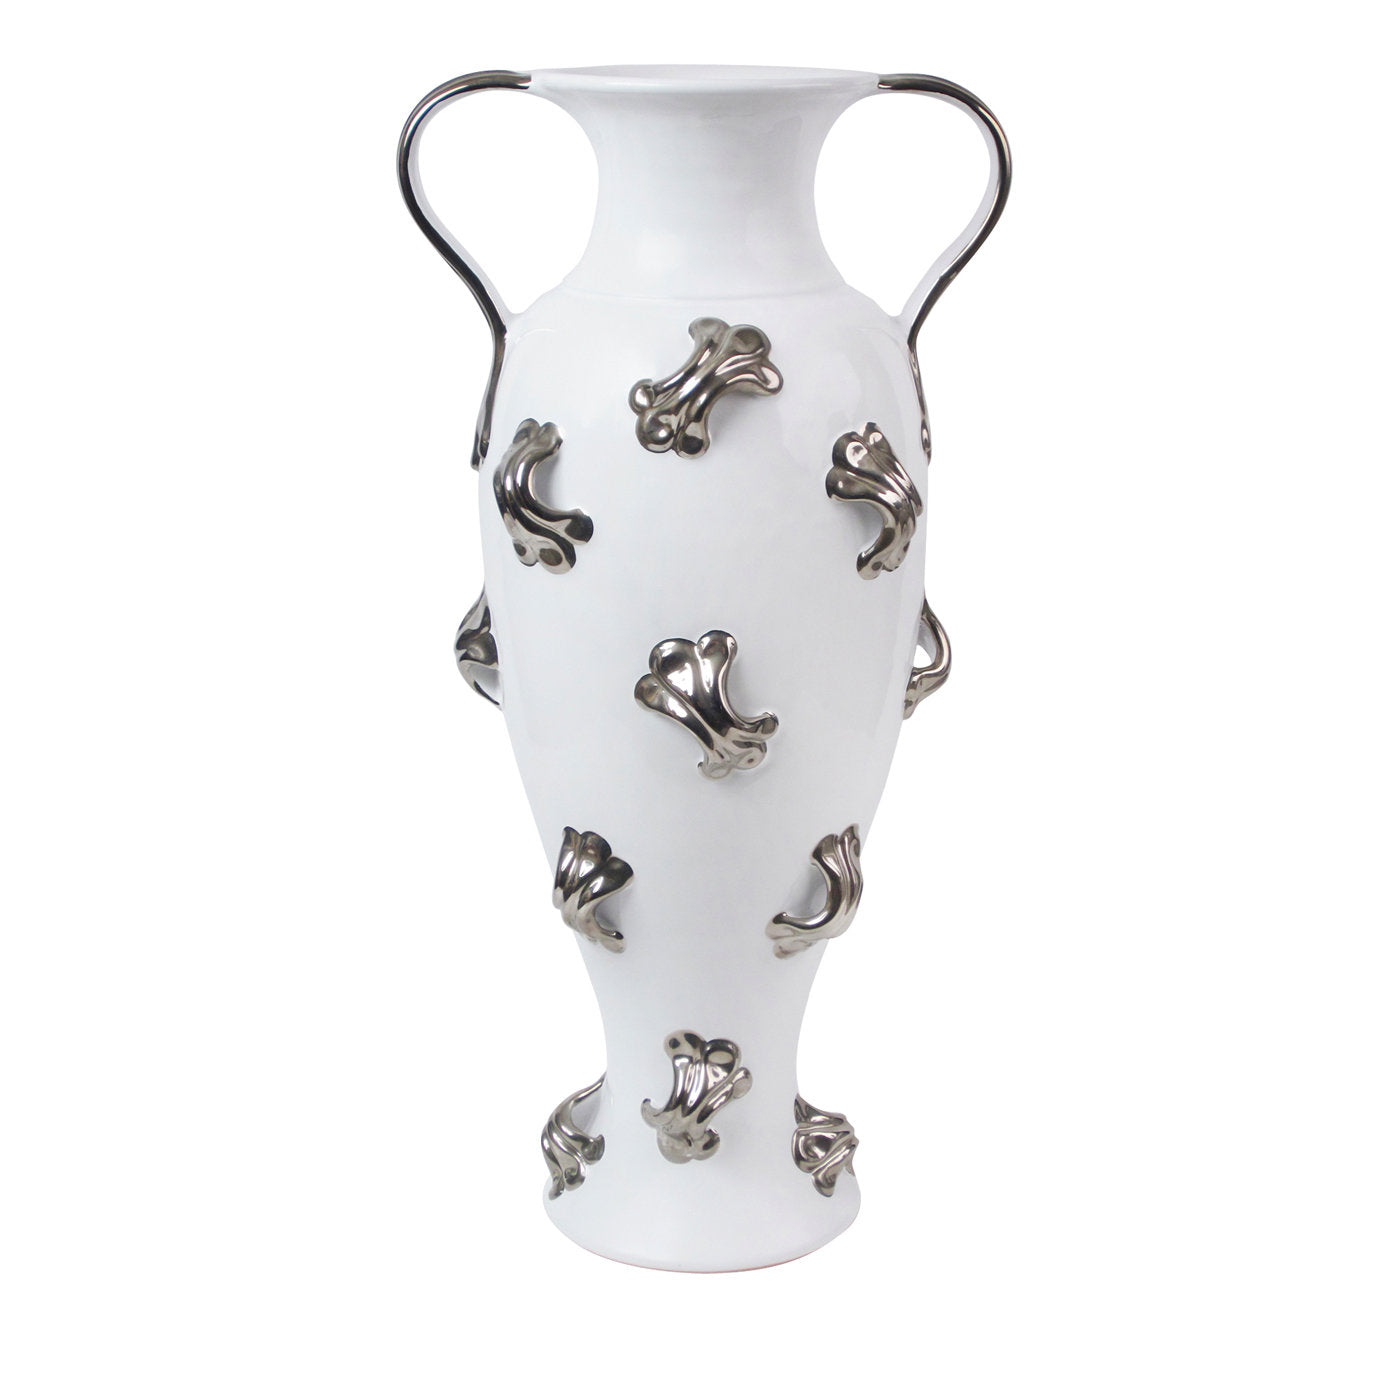 Sphaera Amphora Platin-Vase - Hauptansicht